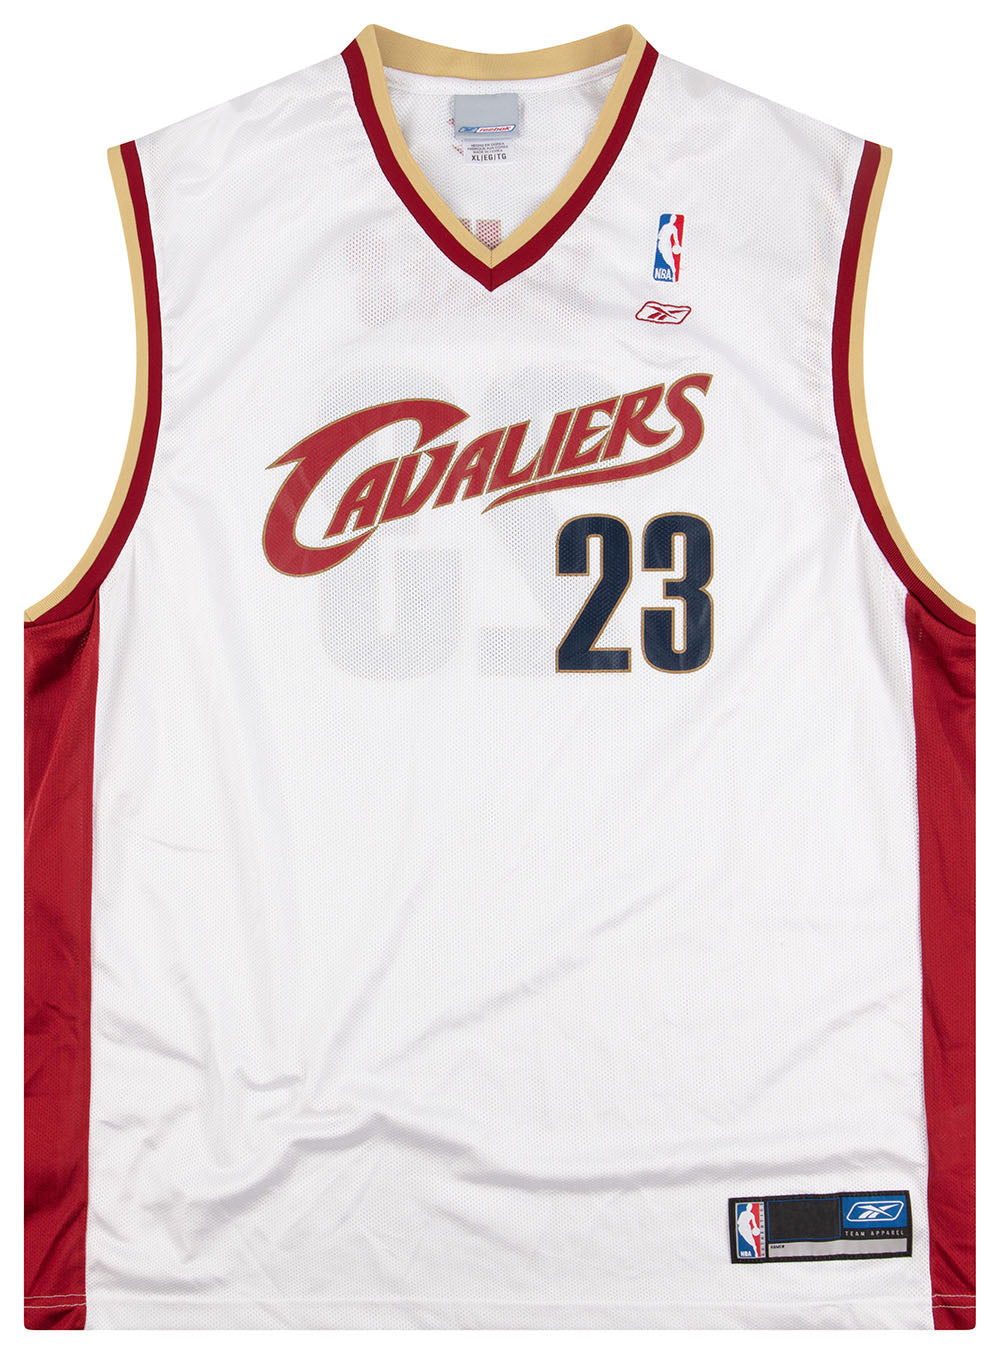 Lebron James #23 Cleveland Cavaliers 2010 Boys M adidas NBA basketball  jersey 